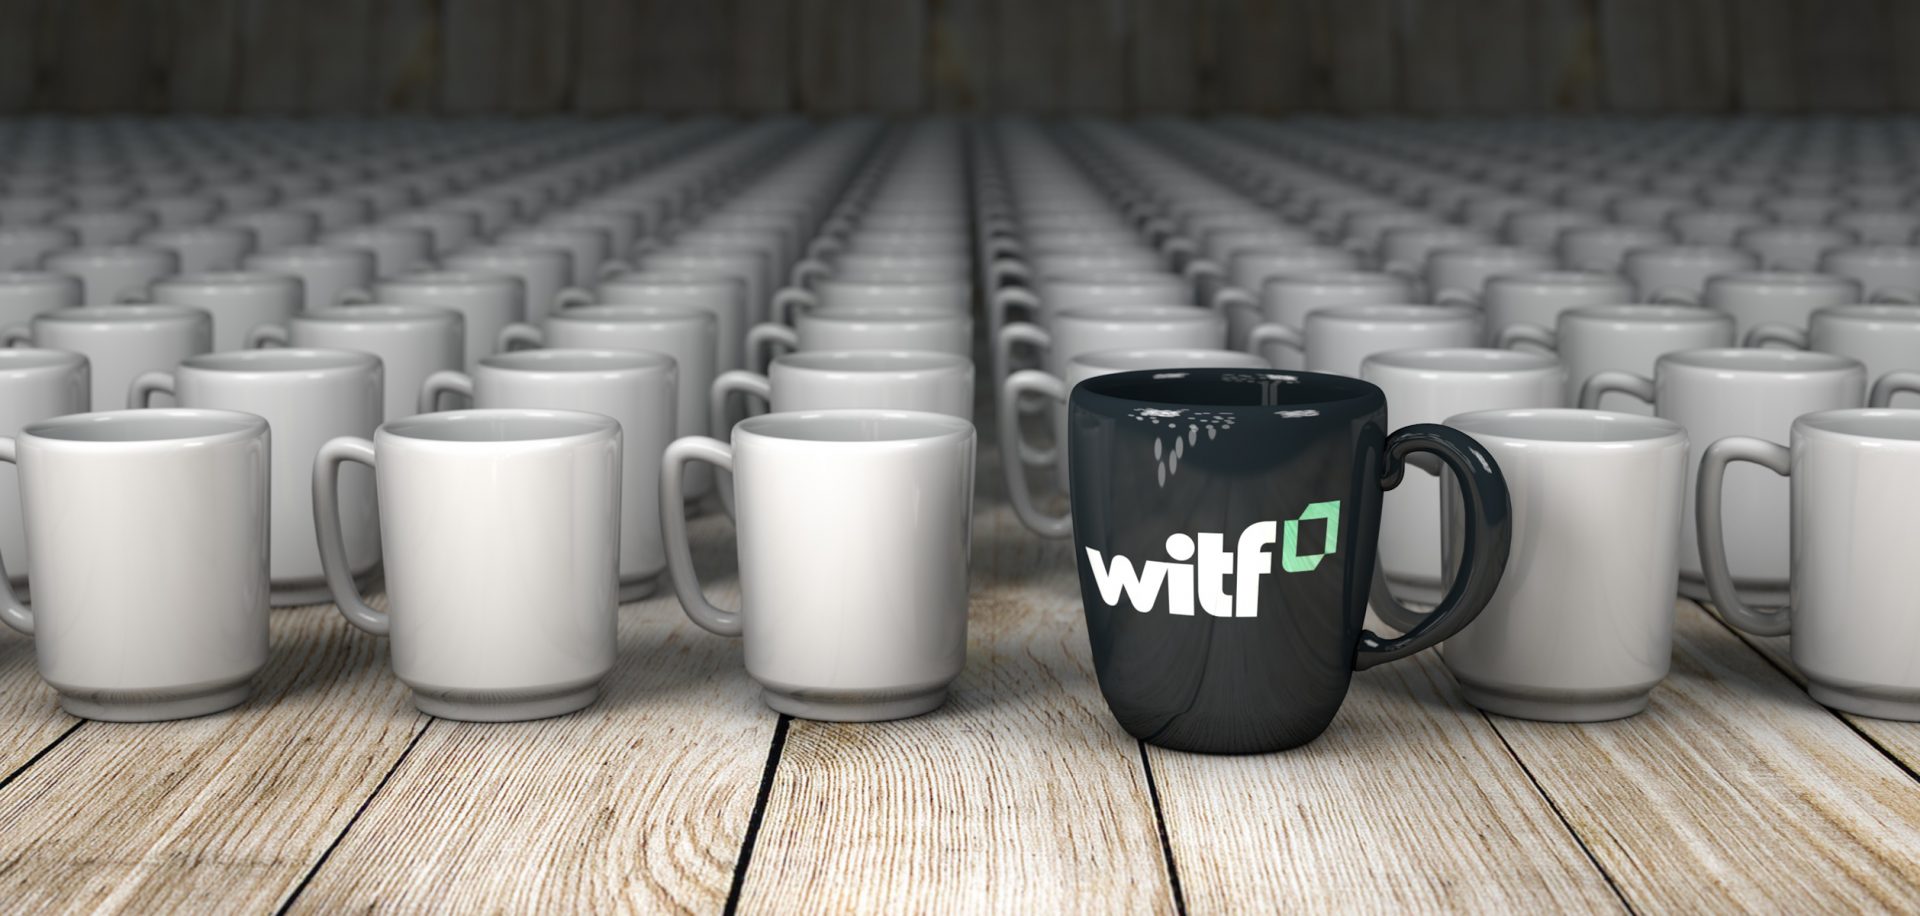 WITF coffee mug in a sea of bland coffee mugs.